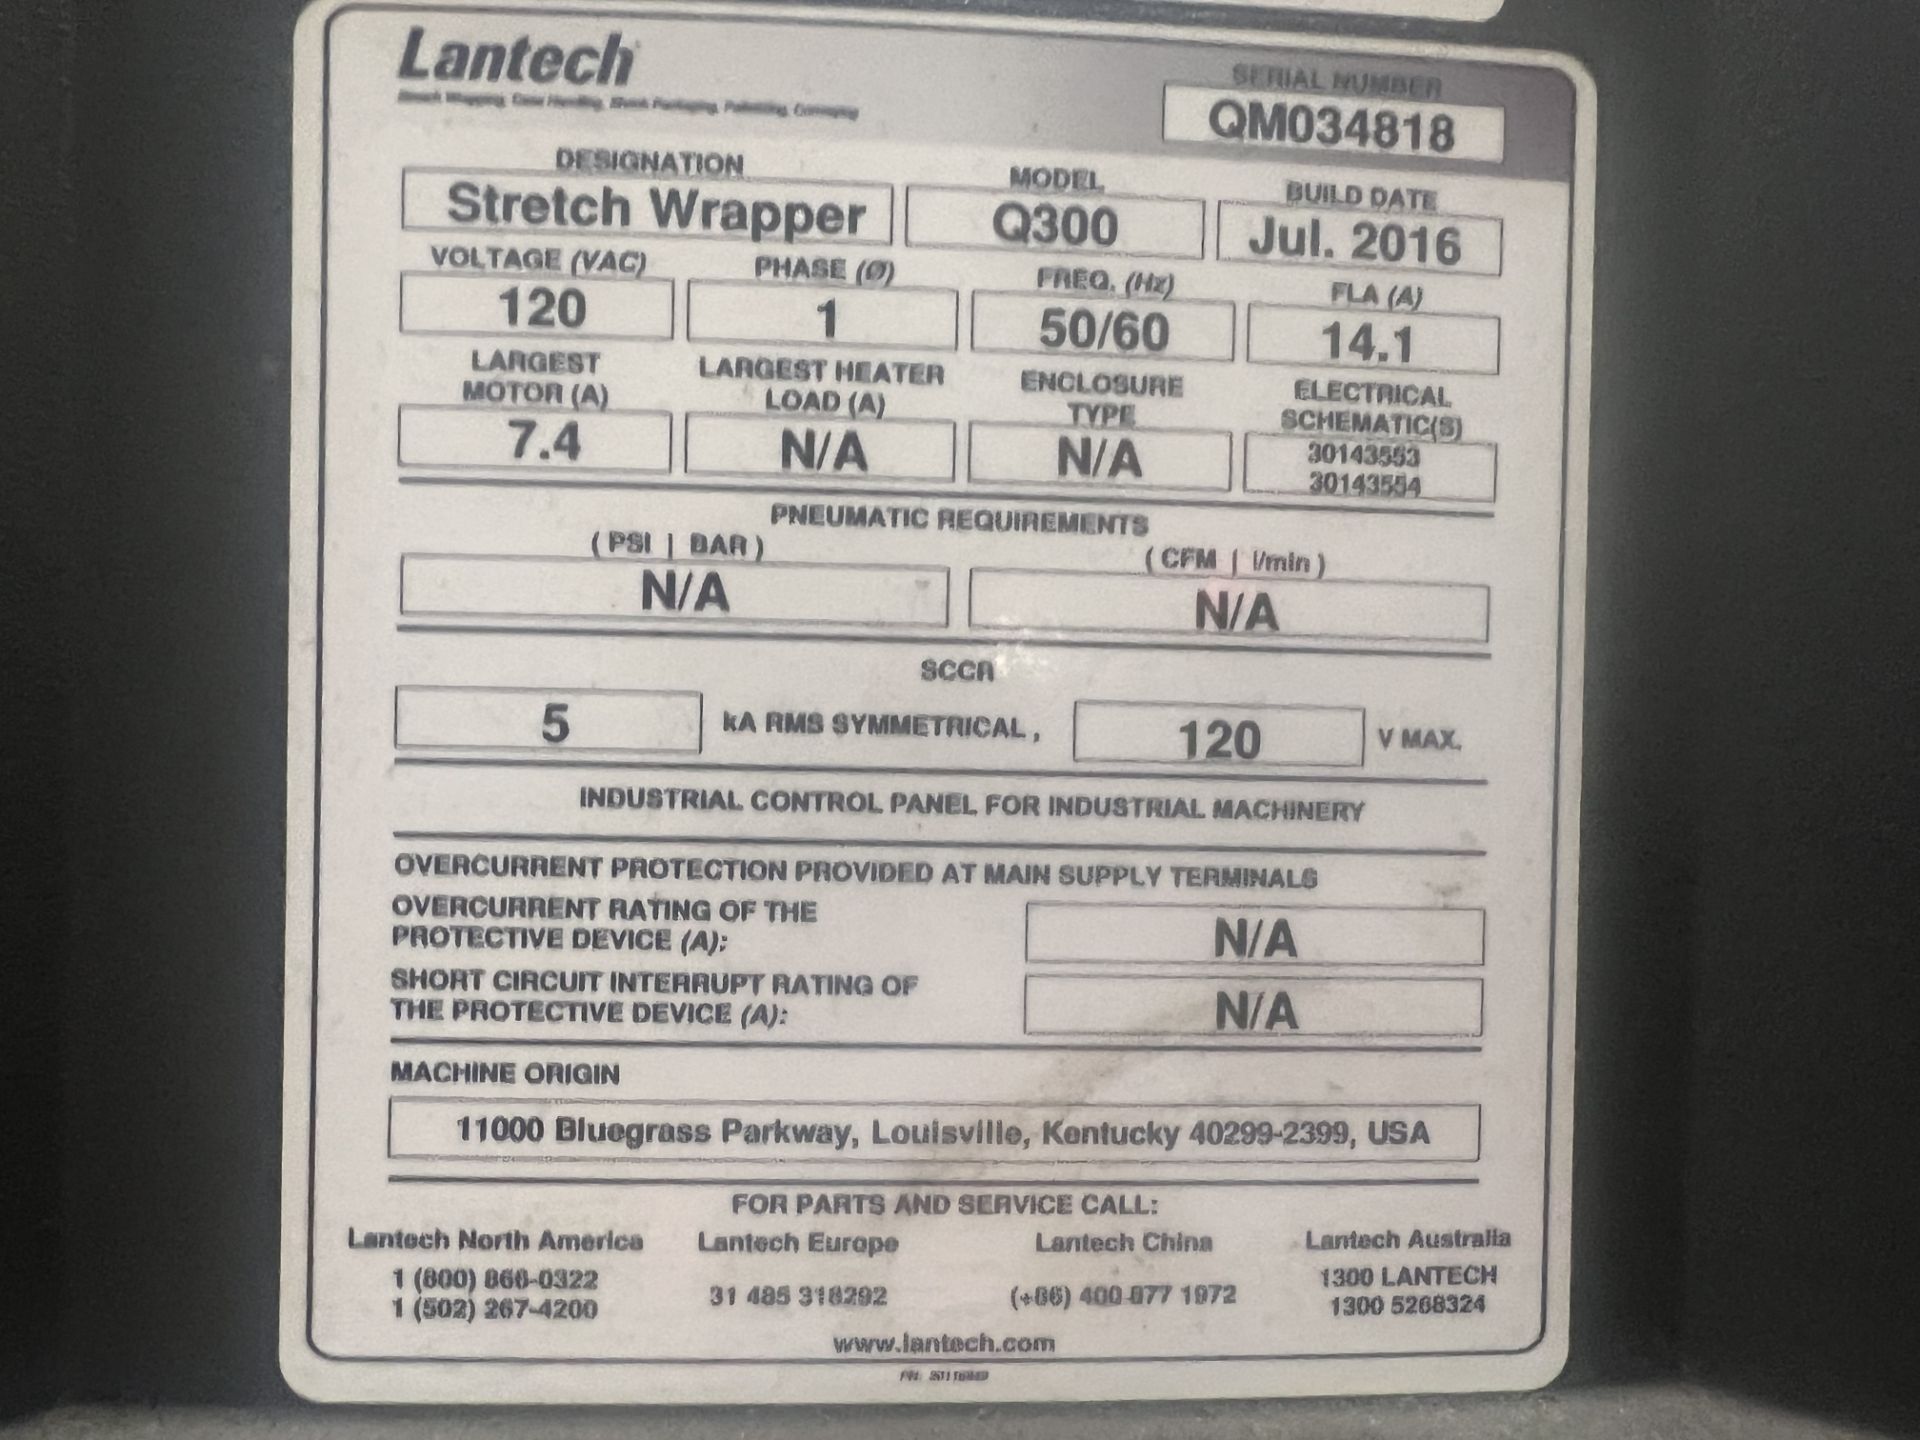 Lantech Stretch Wrapper, Model #Q300, DOM July 2016, Voltage 120, S/N #QM034818 Rigging Fee: $ 975 - Image 4 of 4